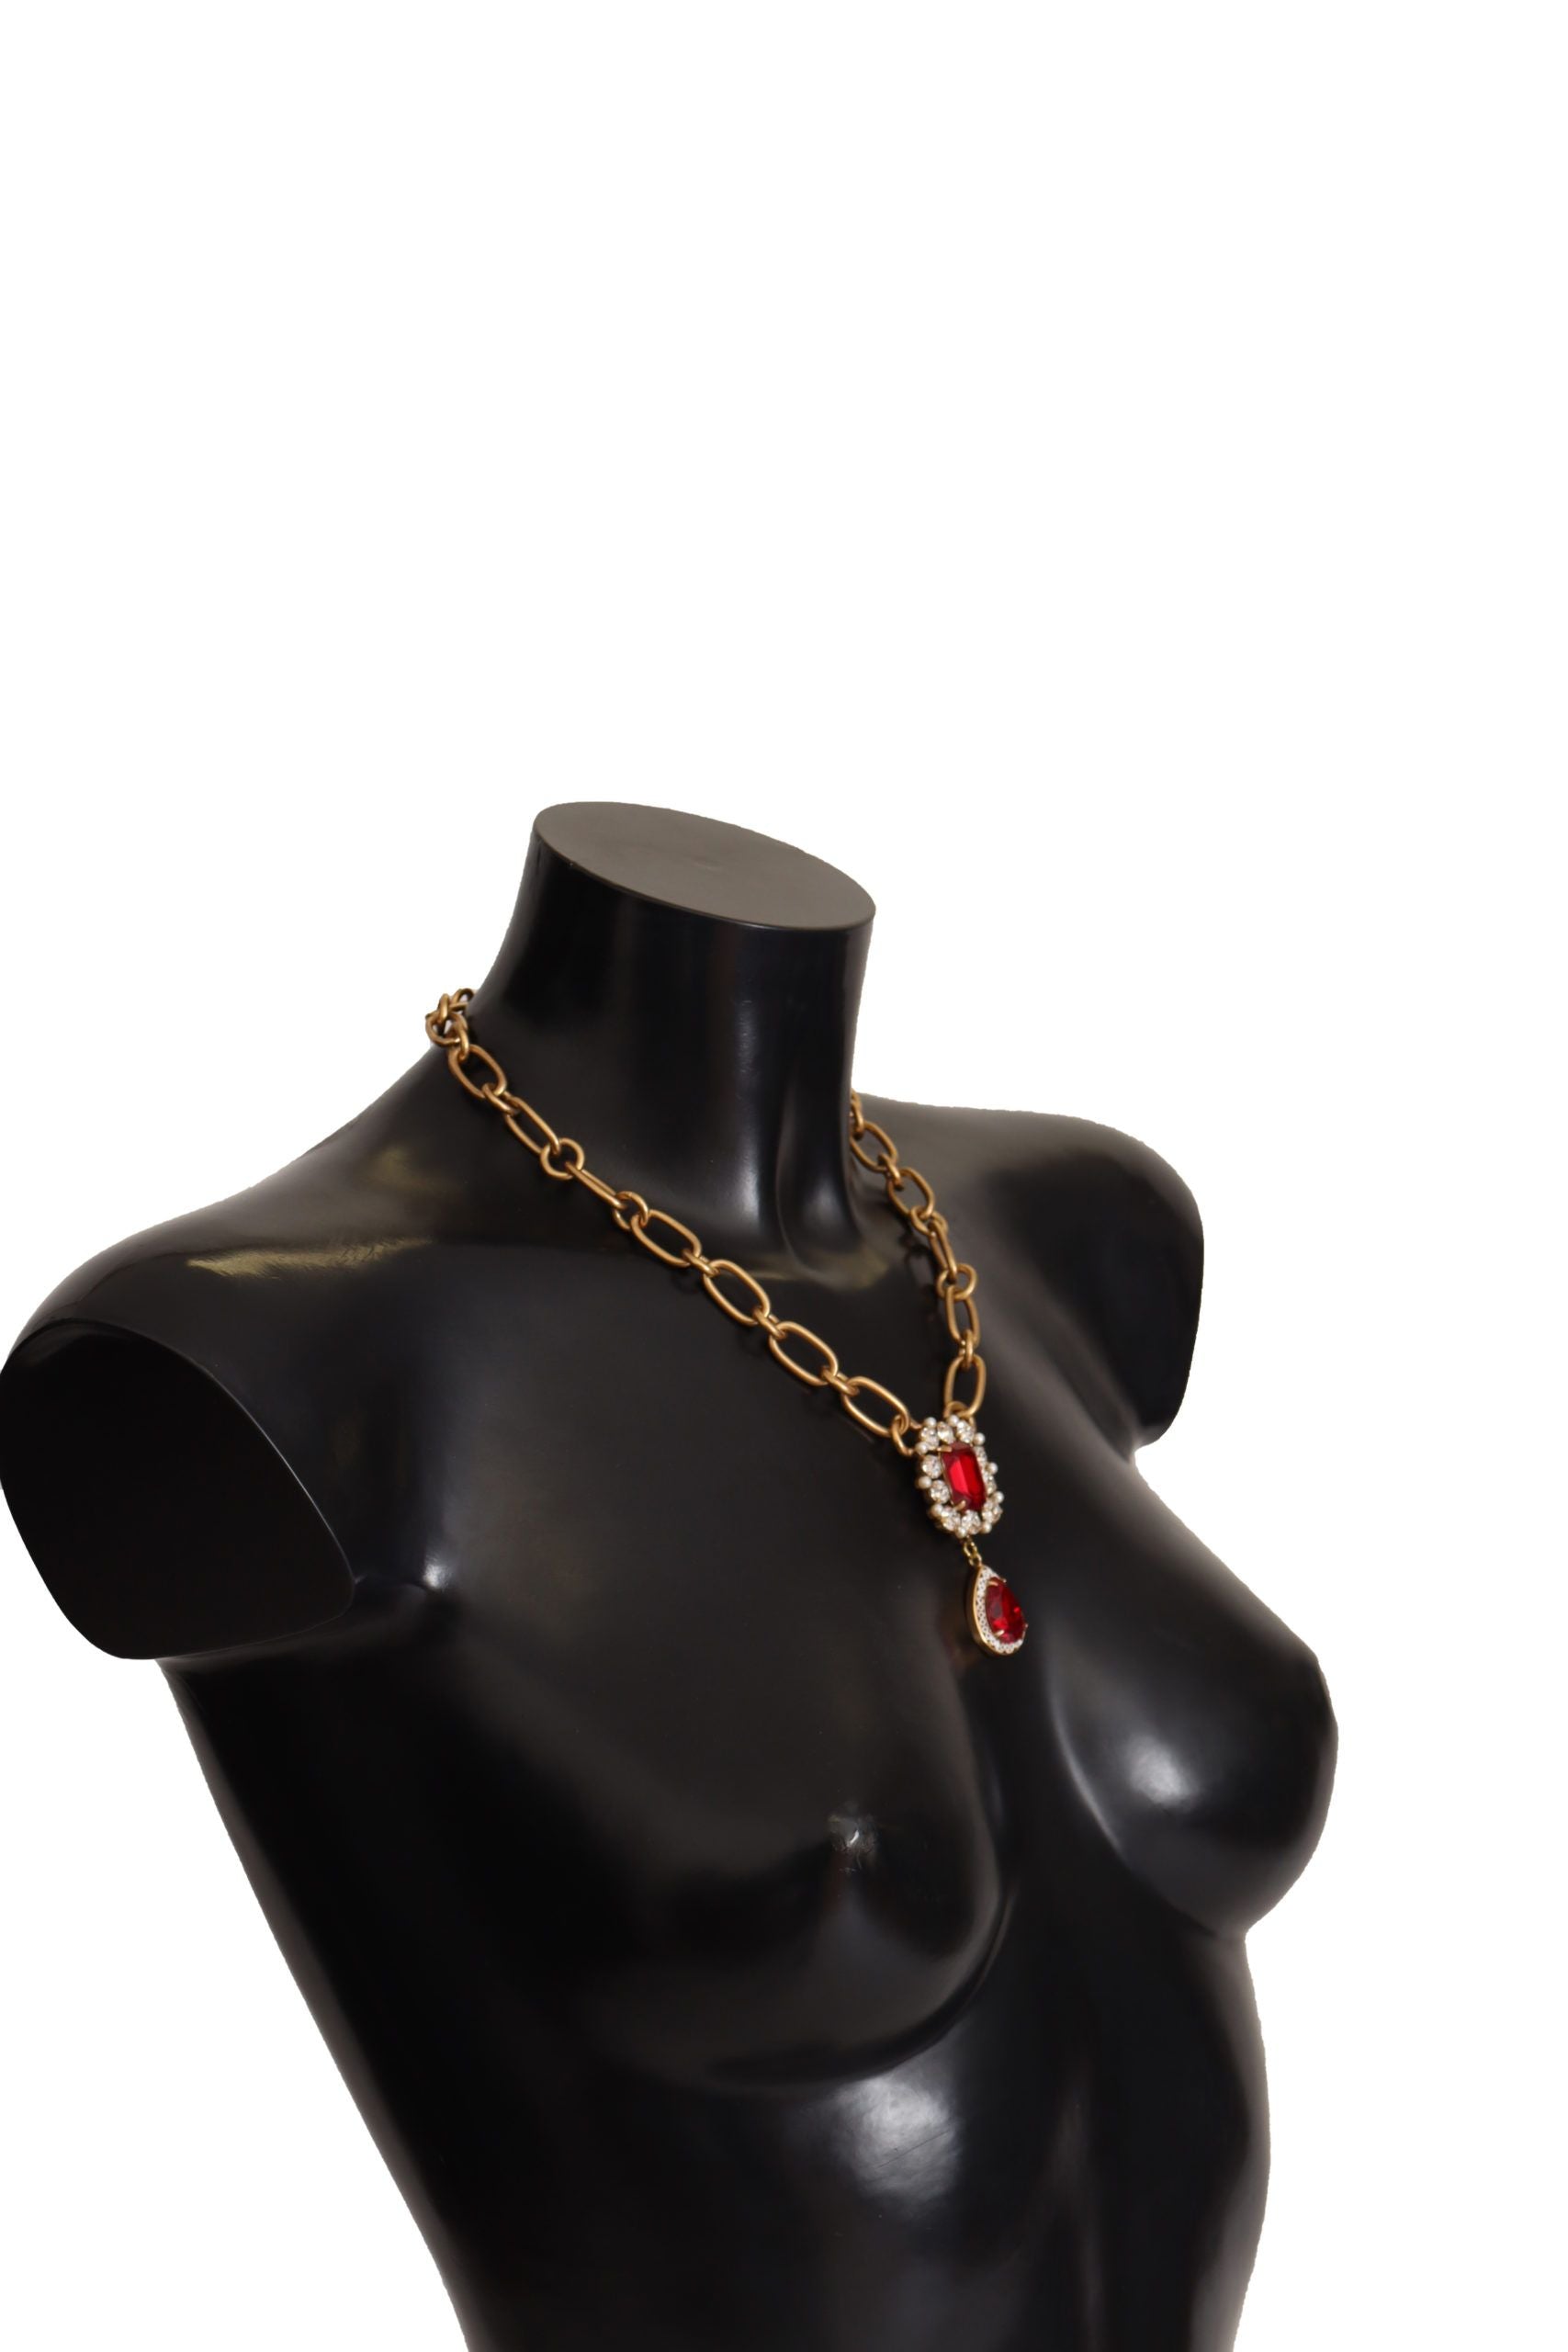 Dolce & Gabbana Gold Brass Chain Red Crystal Pendant Statement